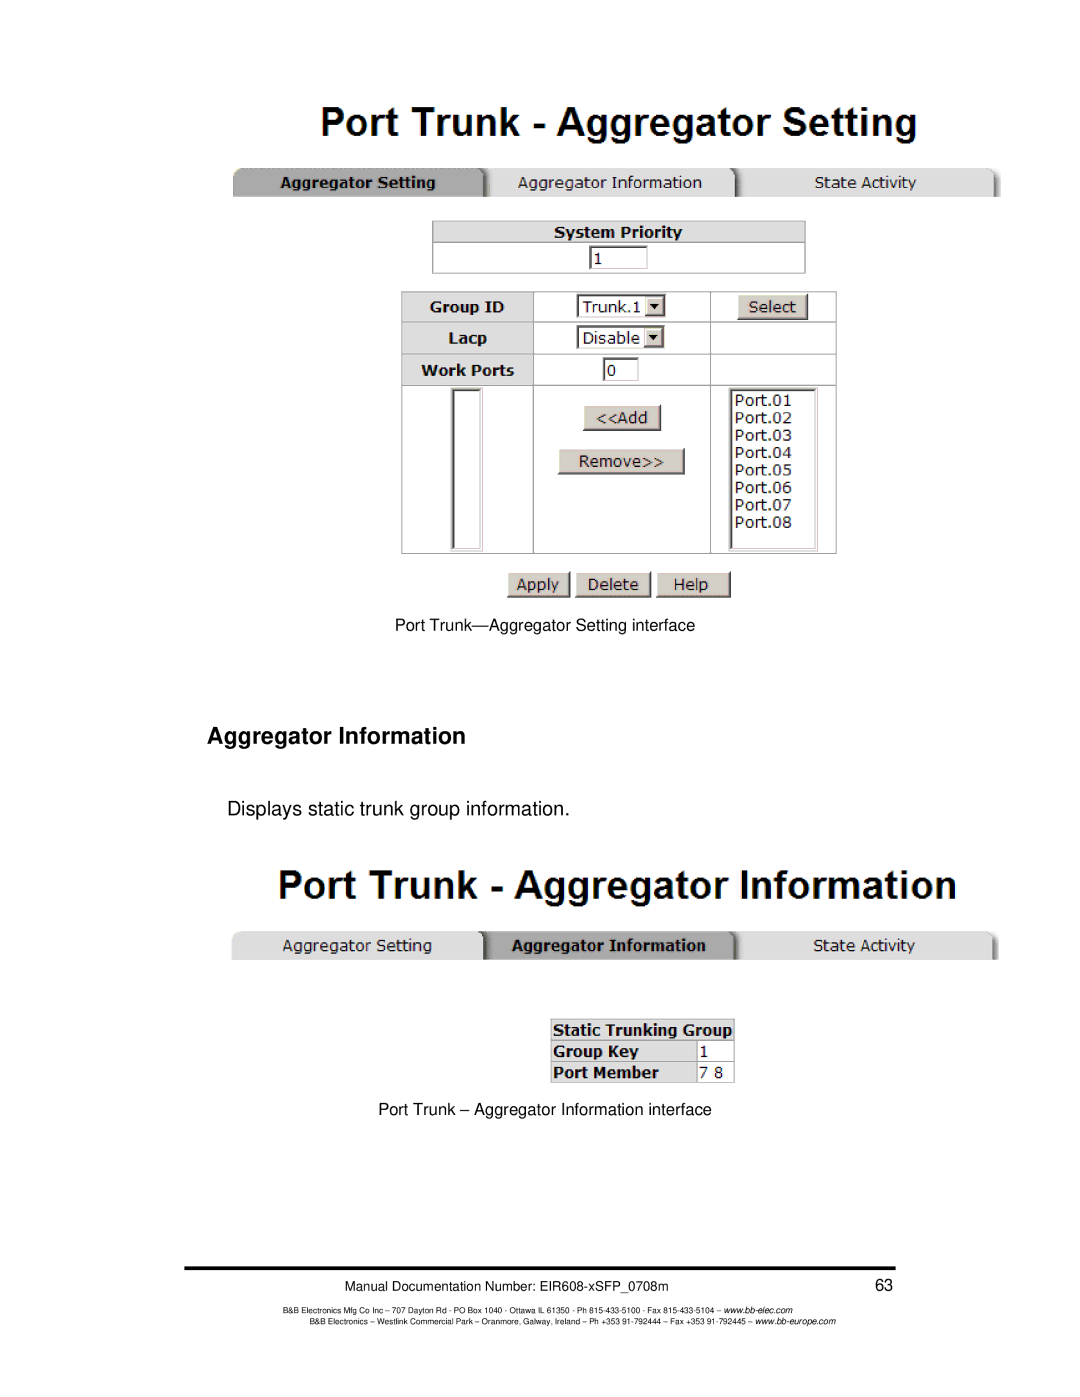 B&B Electronics EIR608-xSFP manual Aggregator Information 